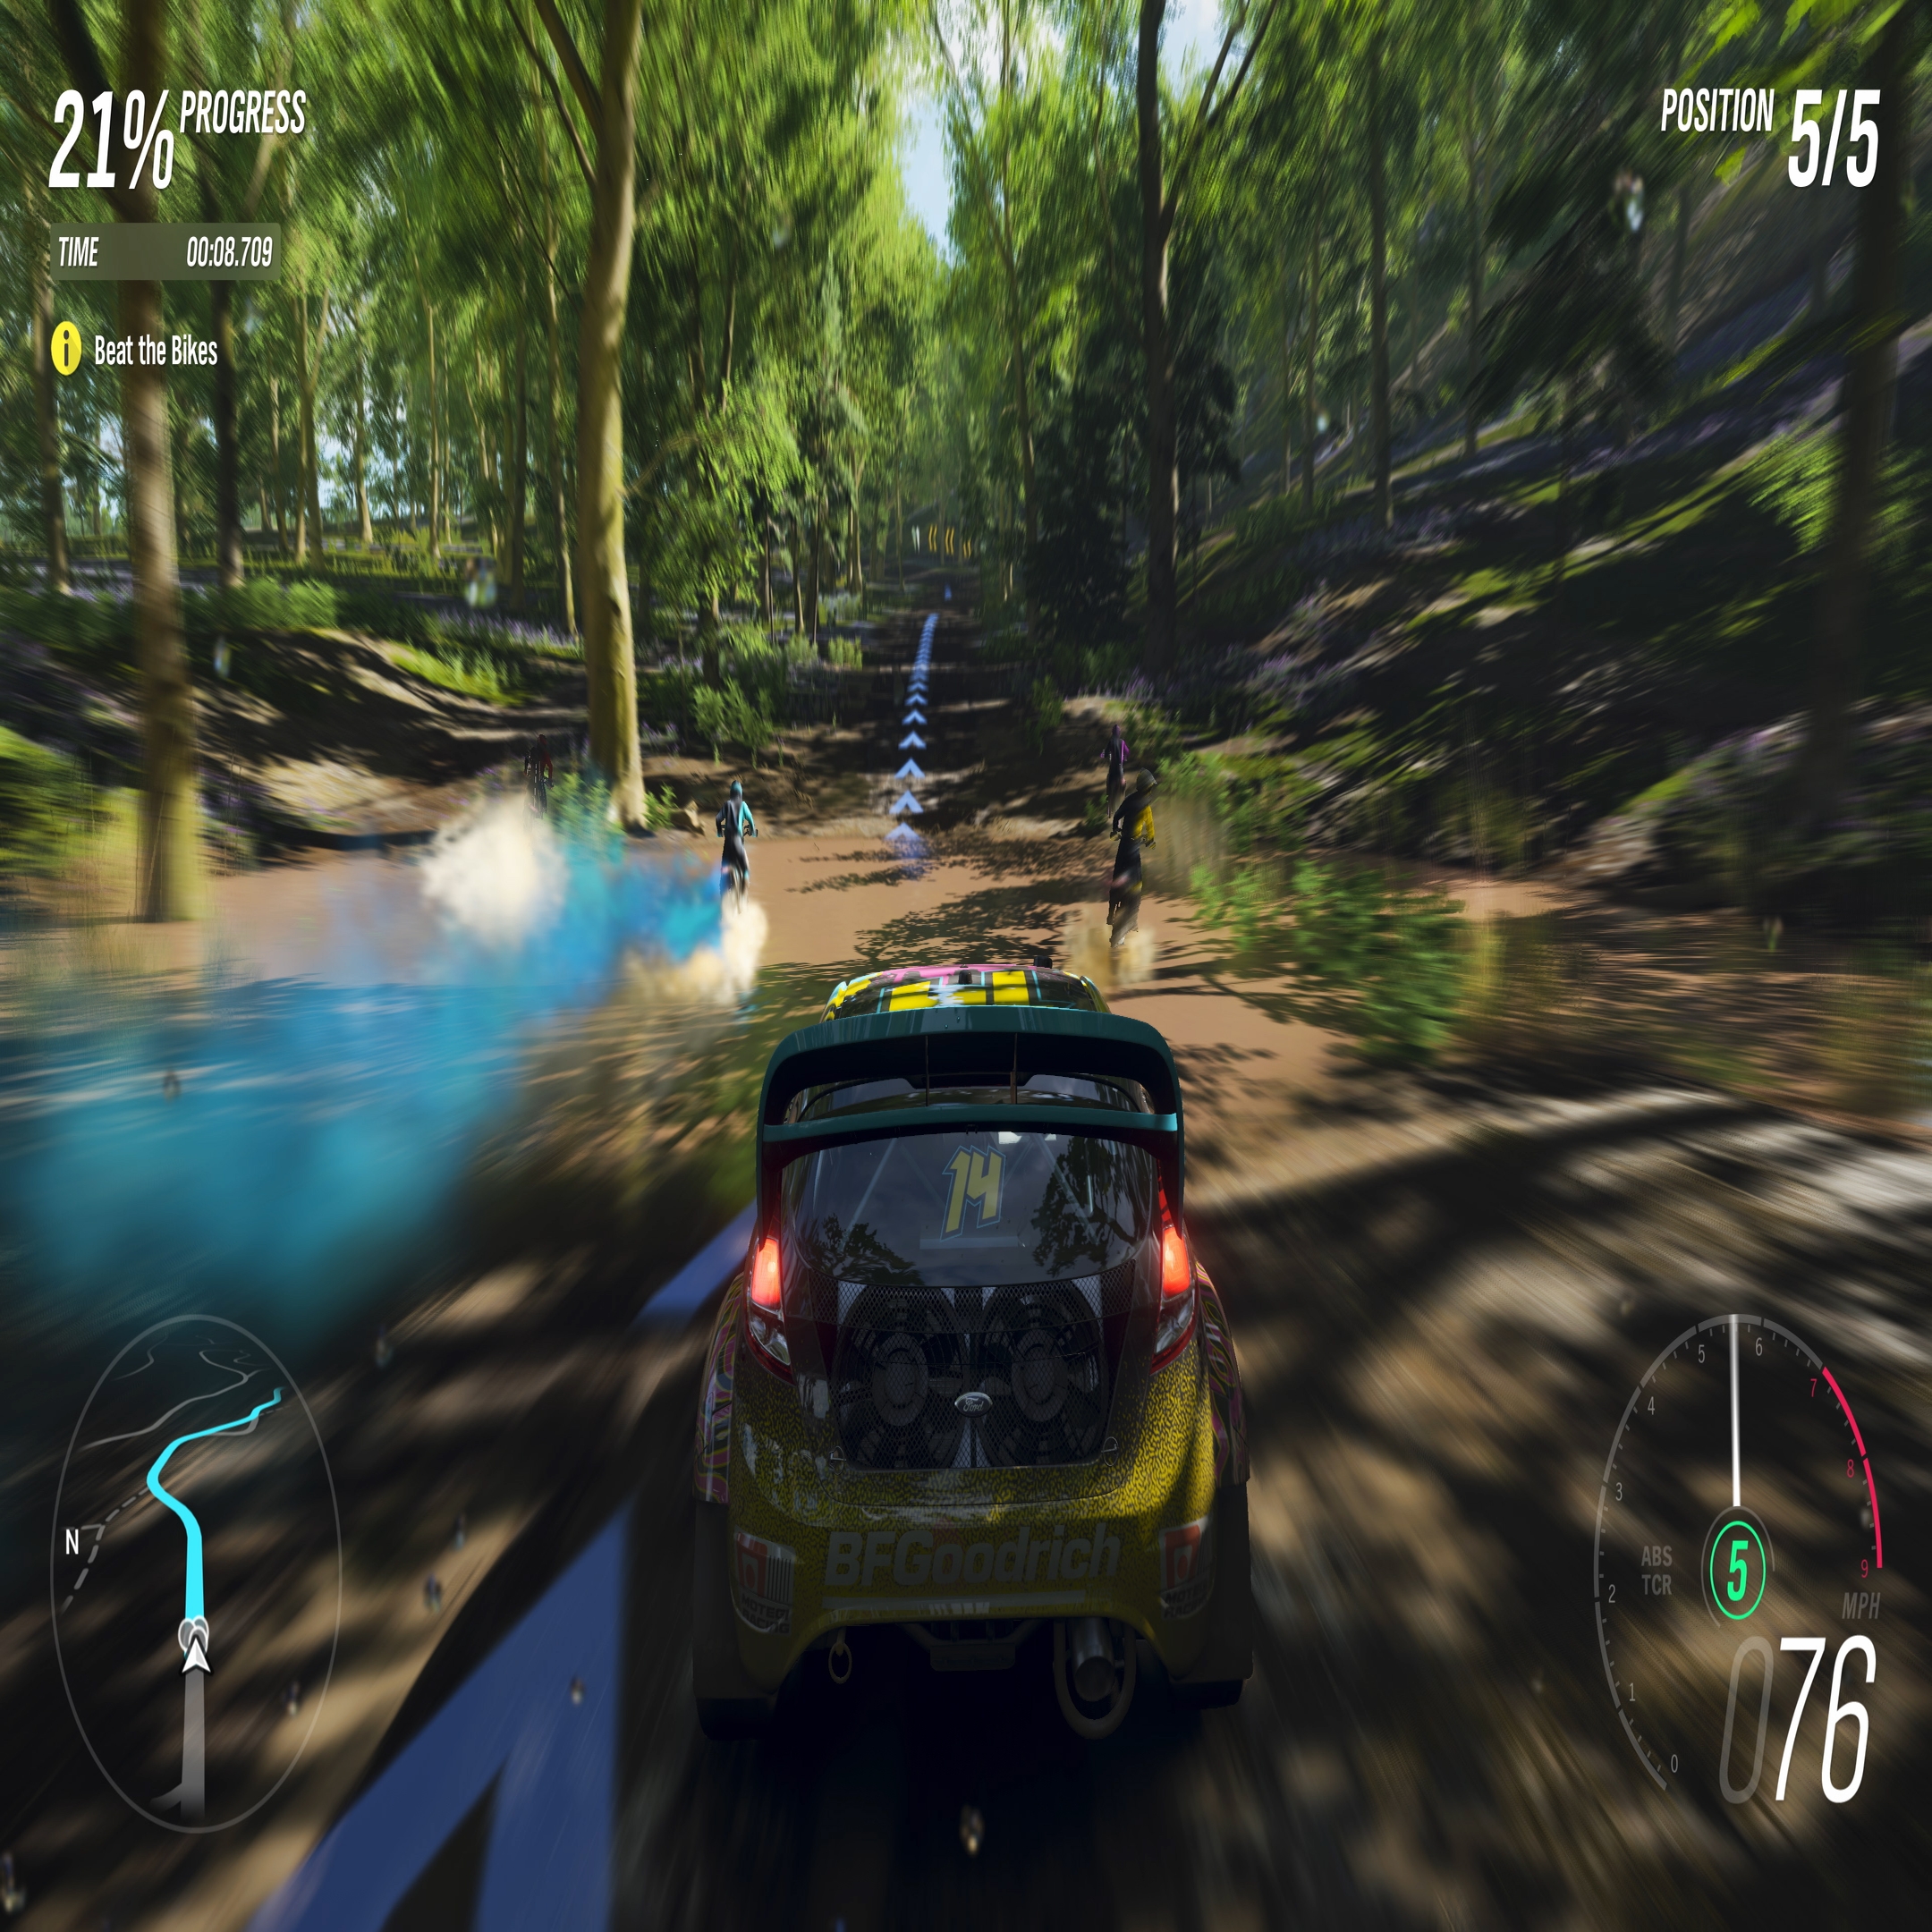 Forza Horizon 4 (Steam version) Review - CyberPowerPC